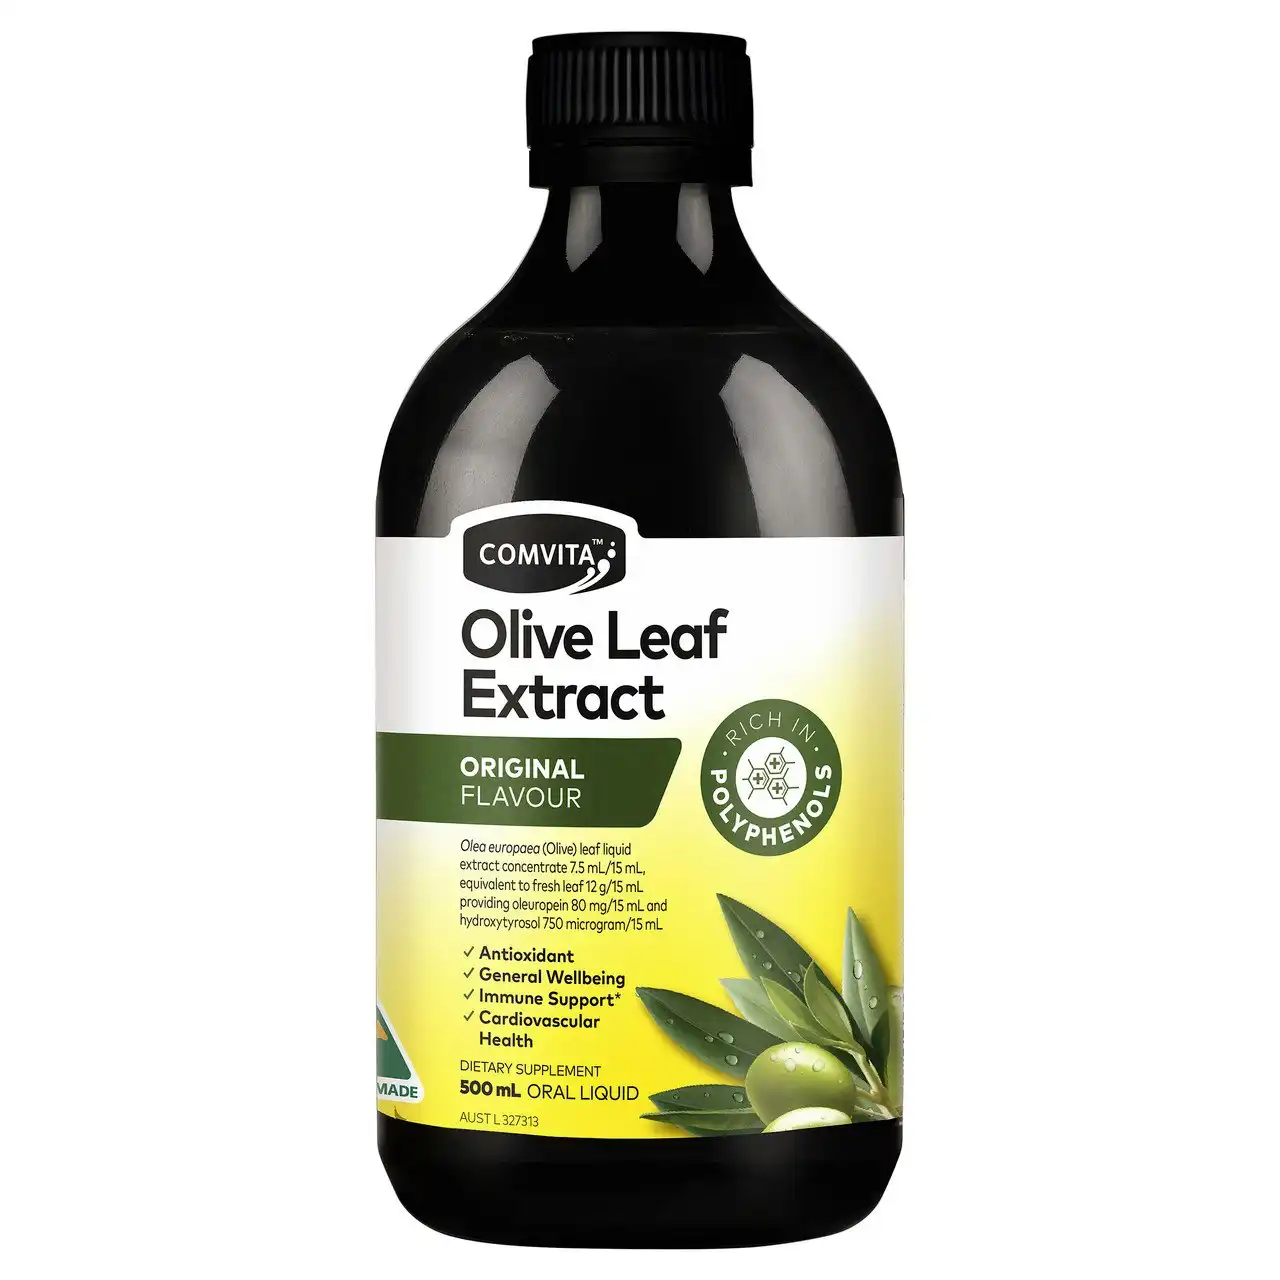 Comvita Olive Leaf Extract Original Flavour 500mL